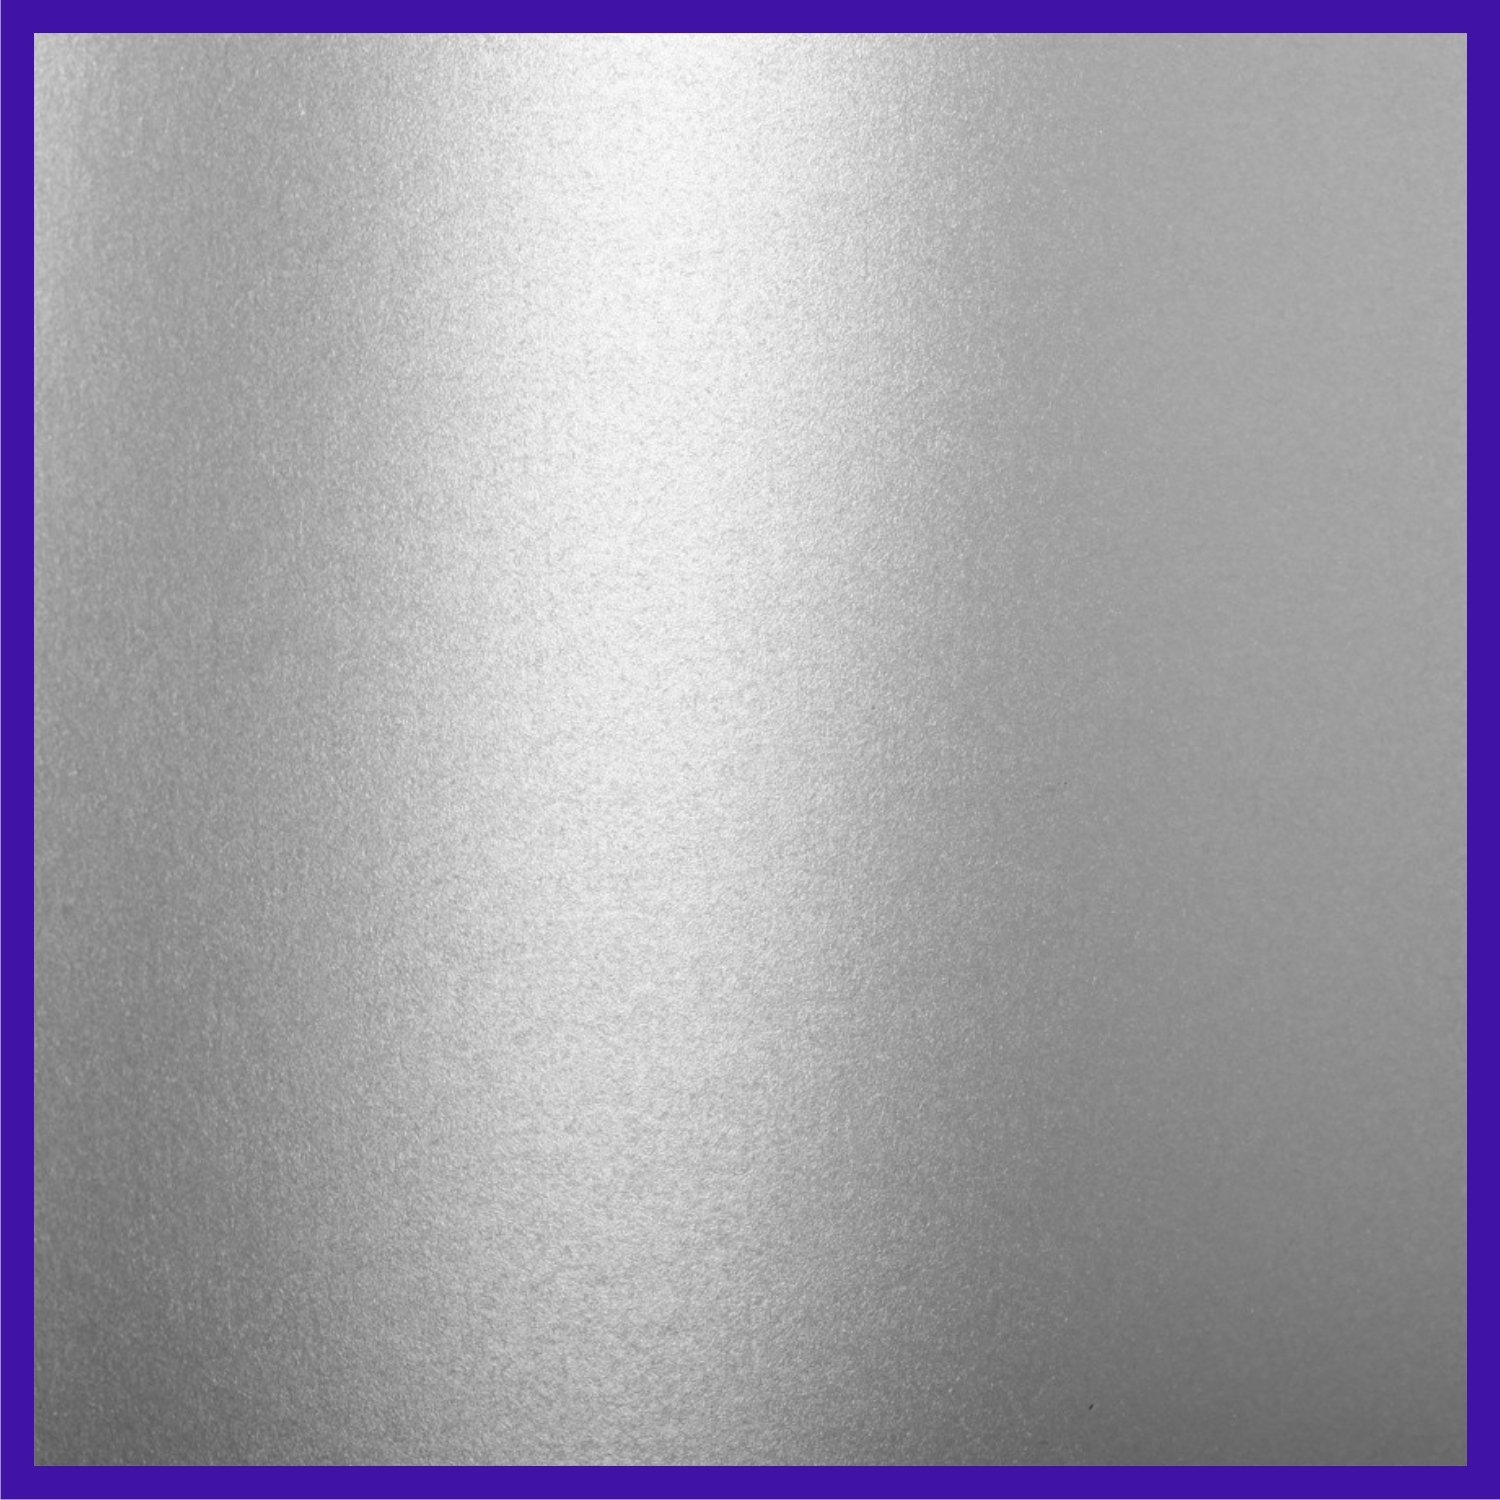 Серебристый металлик. Композит Metallic (Silver g0844). Лакра Metallic металлик серебро 100. Столешница металлик 4401. Анодированный металлик 77000.